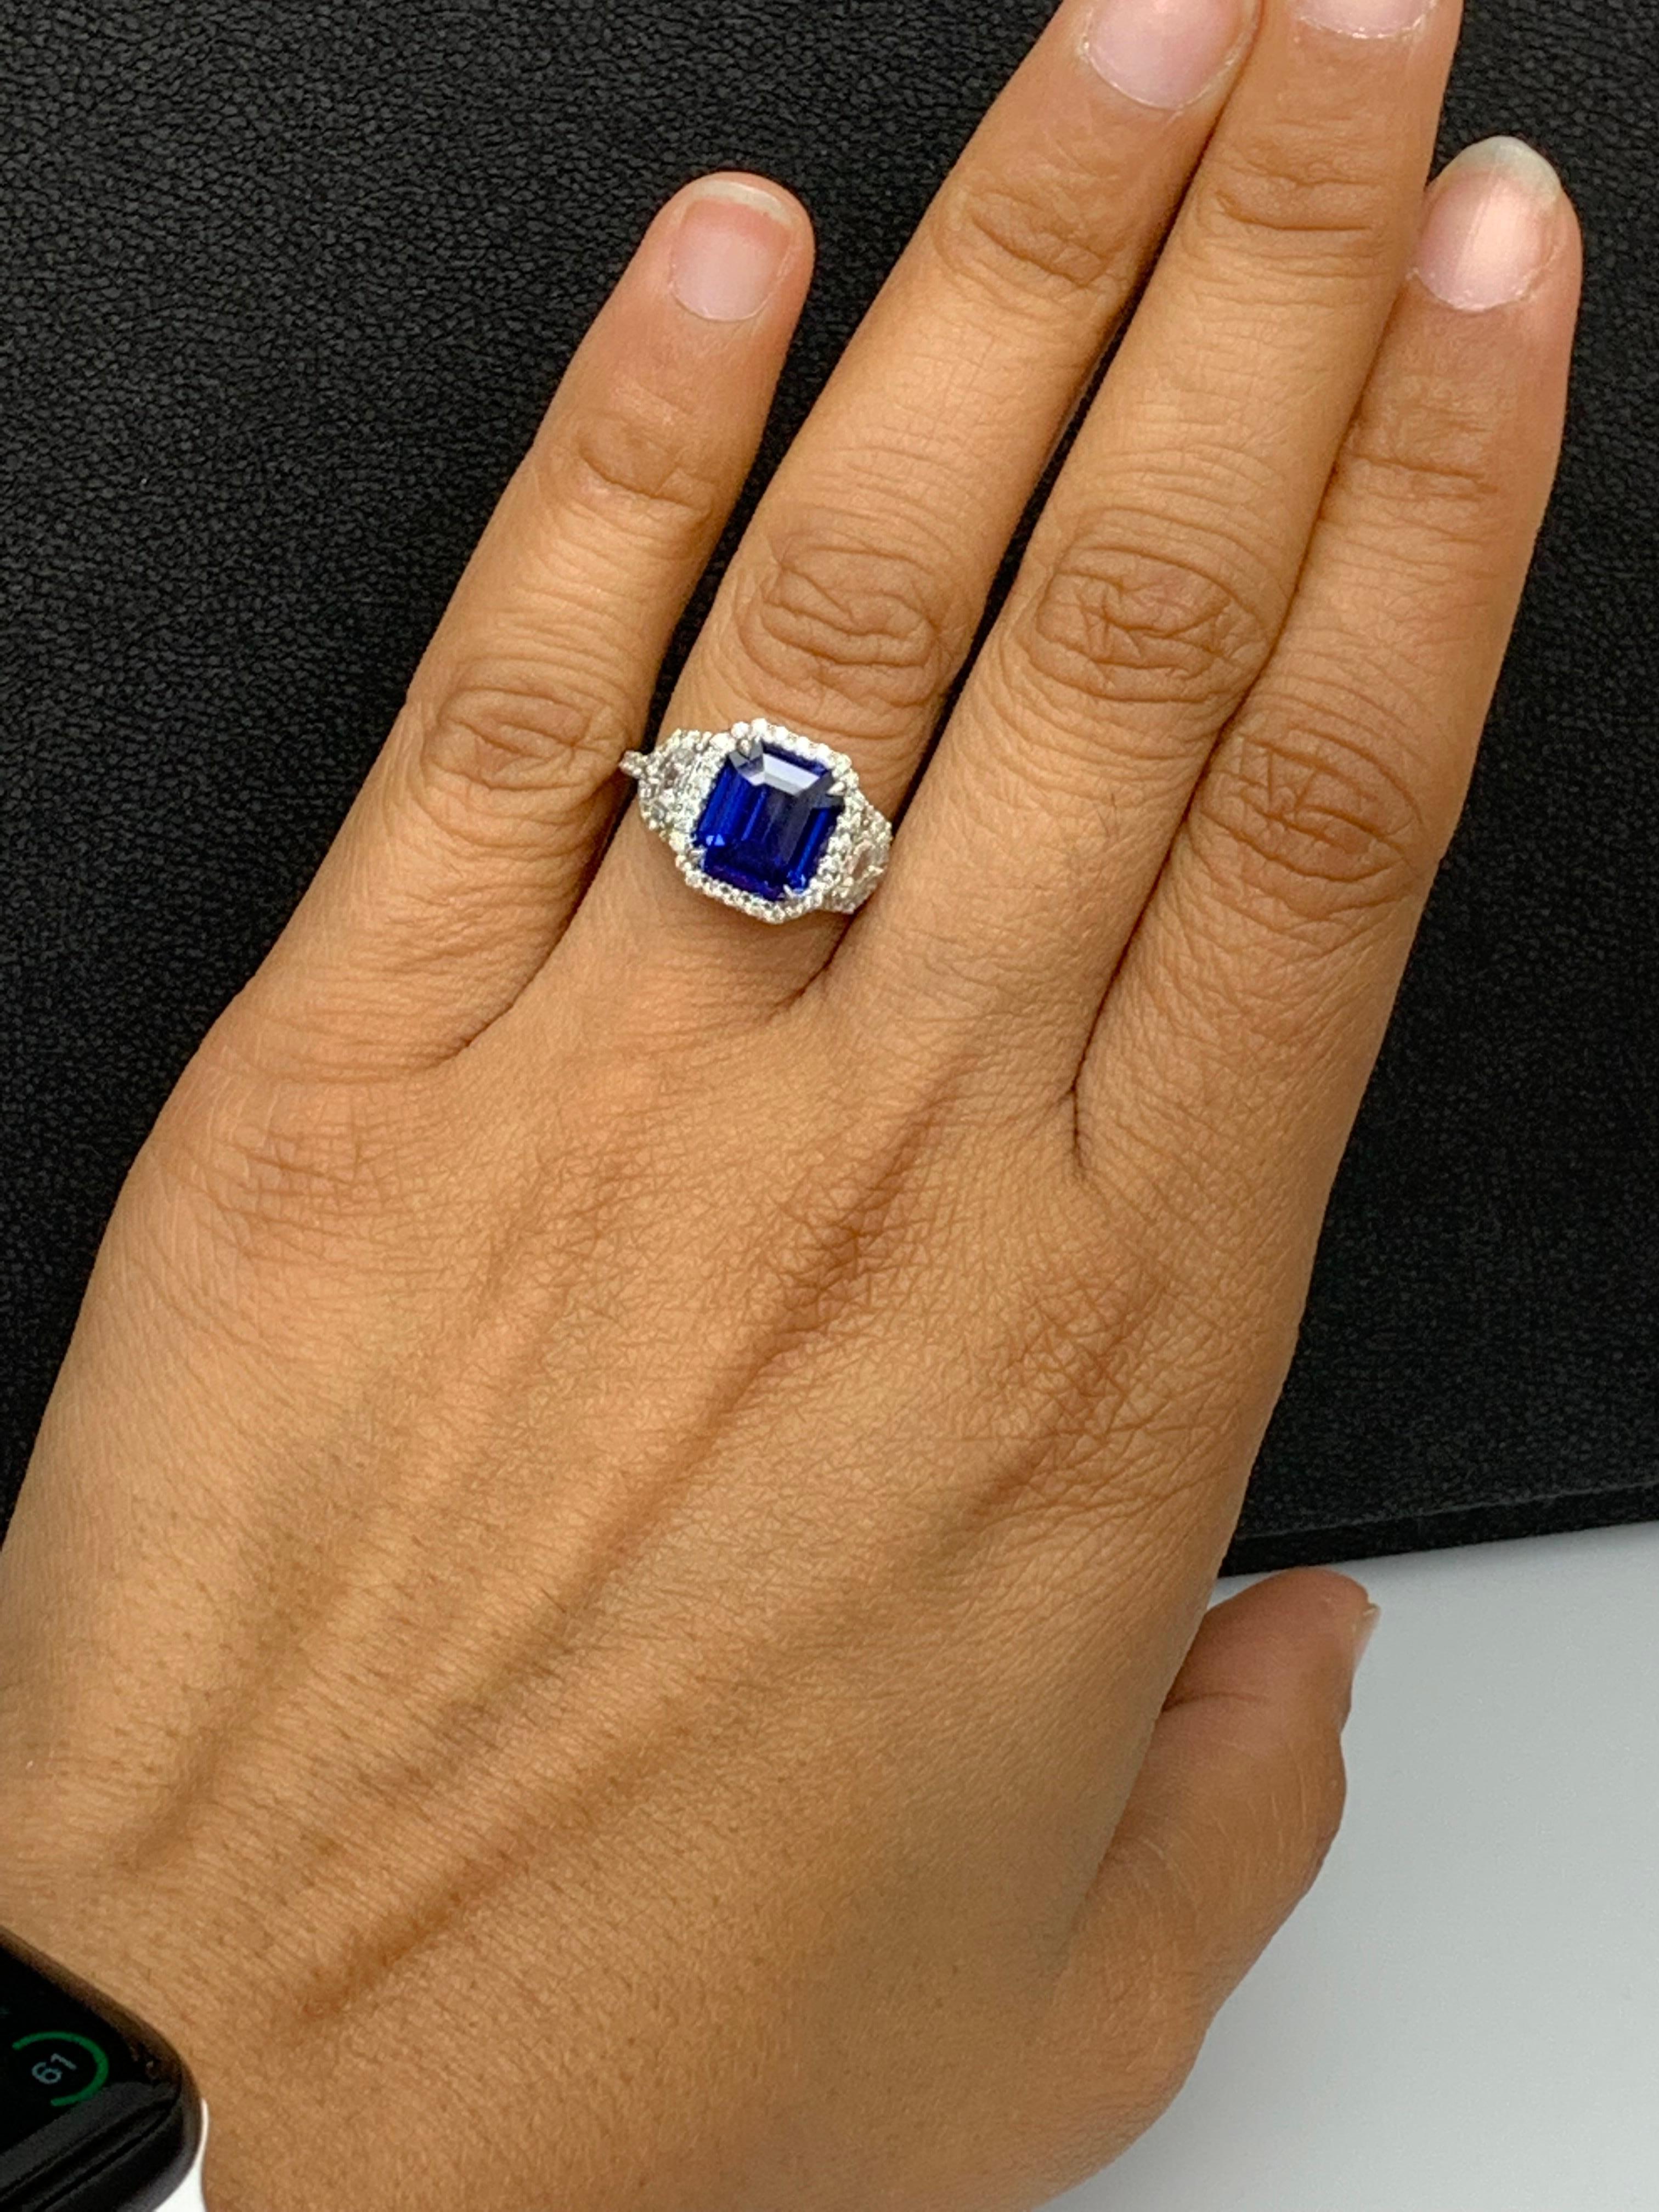 Certified 4.07 Carat Emerald Cut Sapphire Diamond 3 Stone Halo Ring in Platinum For Sale 6